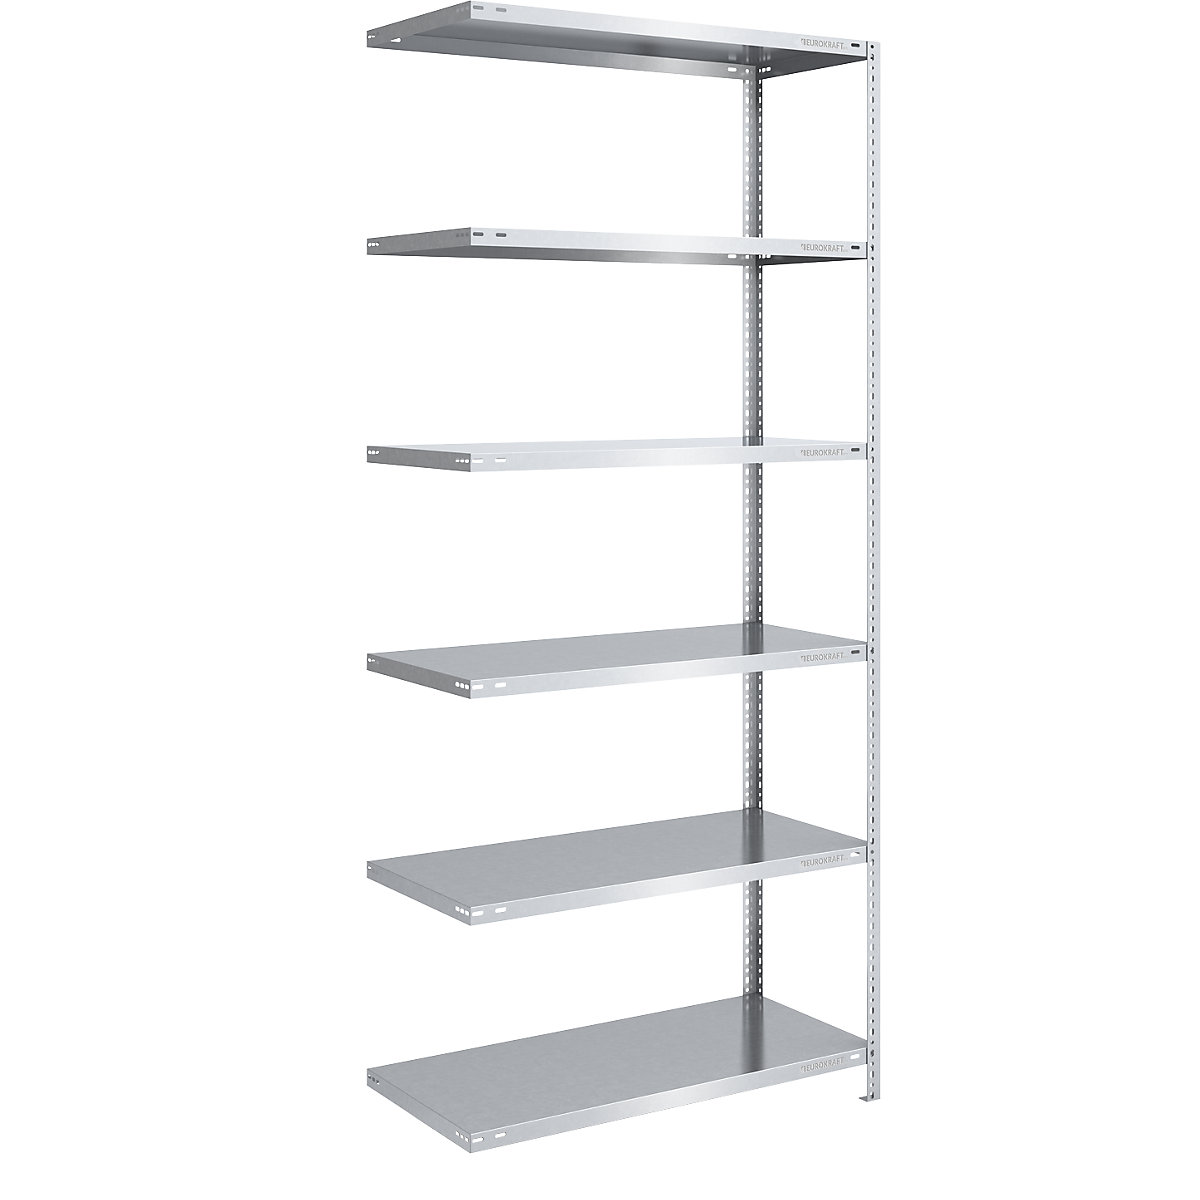 Bolt-together storage shelving, zinc plated, medium duty – eurokraft pro, shelf unit height 2500 mm, shelf width 1000 mm, depth 600 mm, extension shelf unit-3